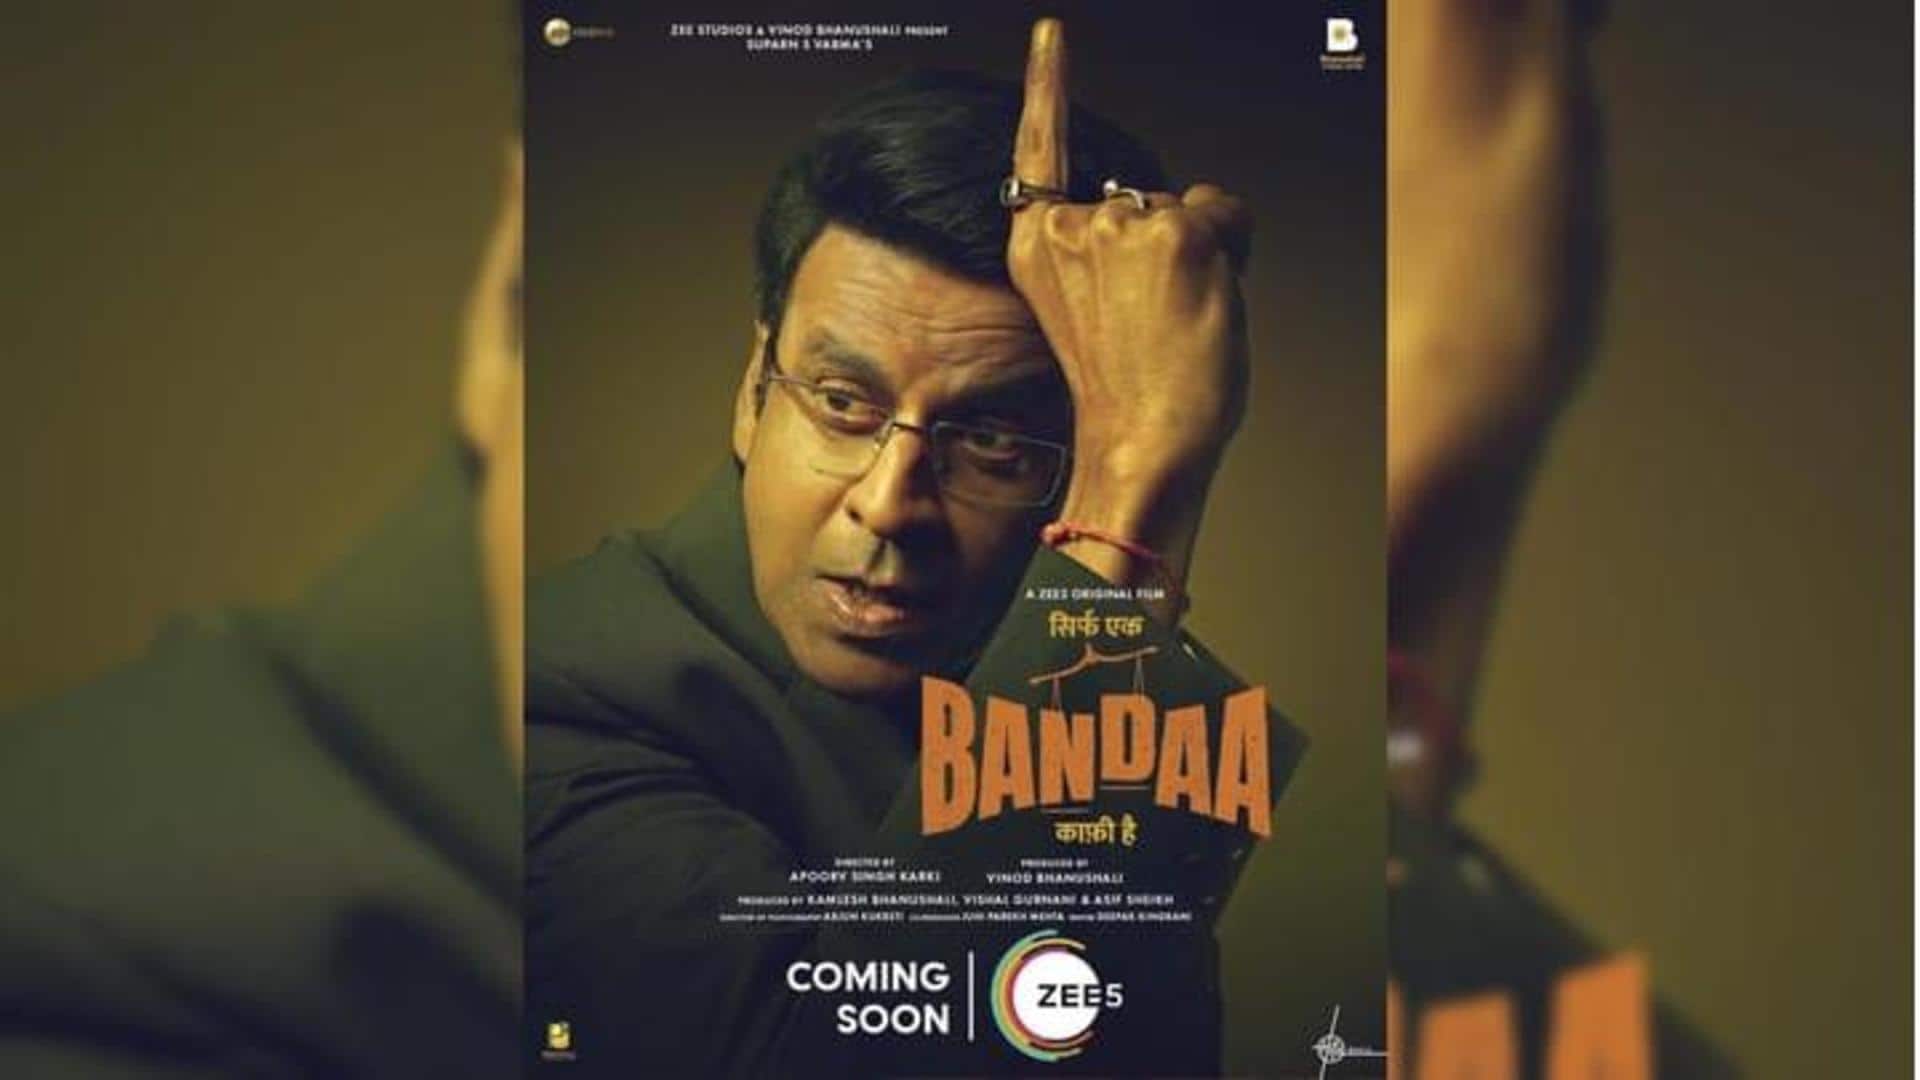 'Bandaa' trailer released: It's Manoj Bajpayee v/s notorious godman!